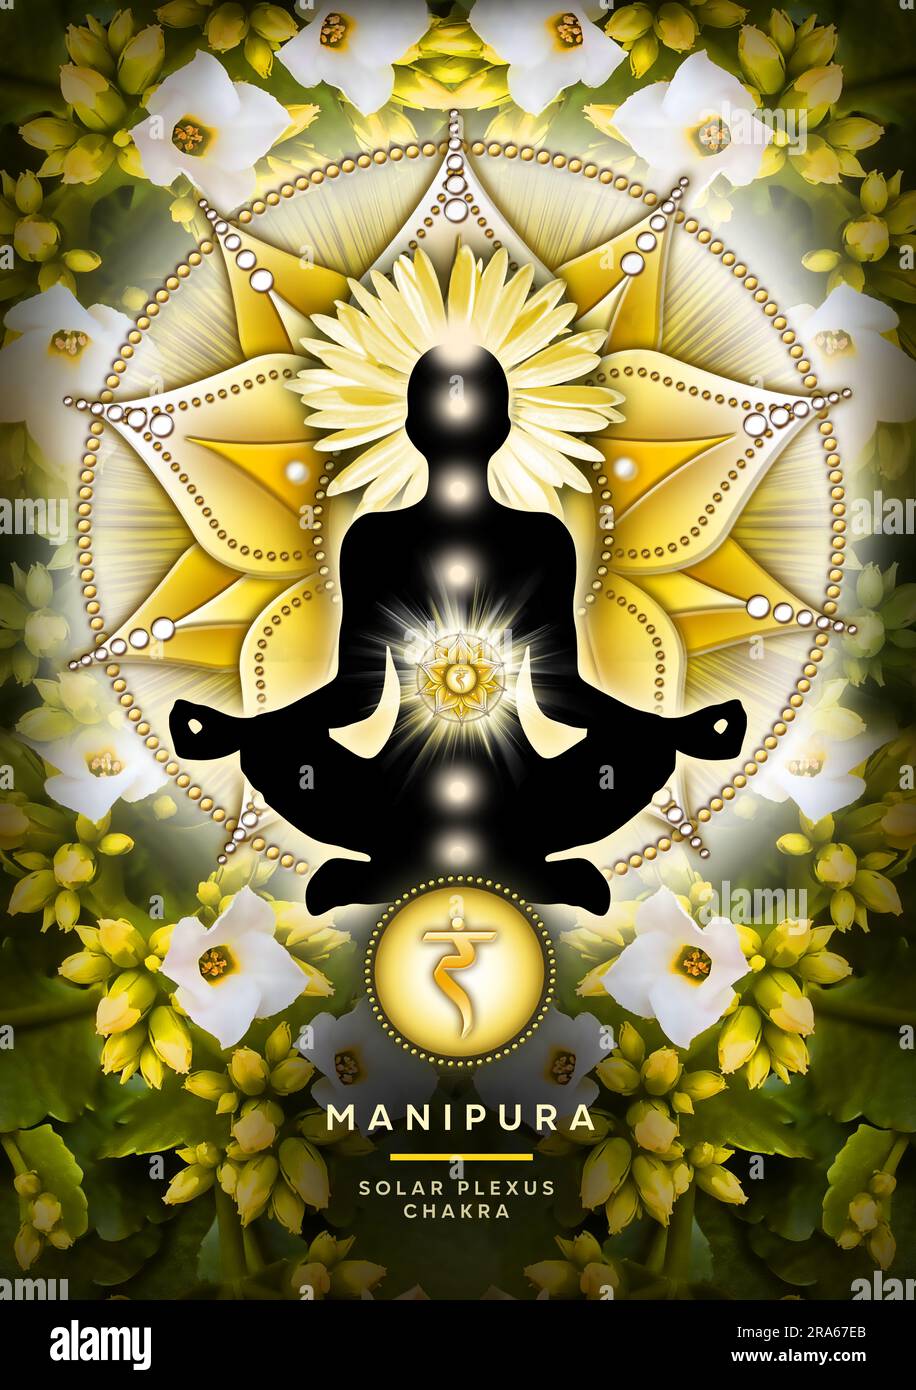 Solar plexus chakra meditation in yoga lotus pose, in front of Manipura chakra symbol and beautiful spring flowers. Stock Photo